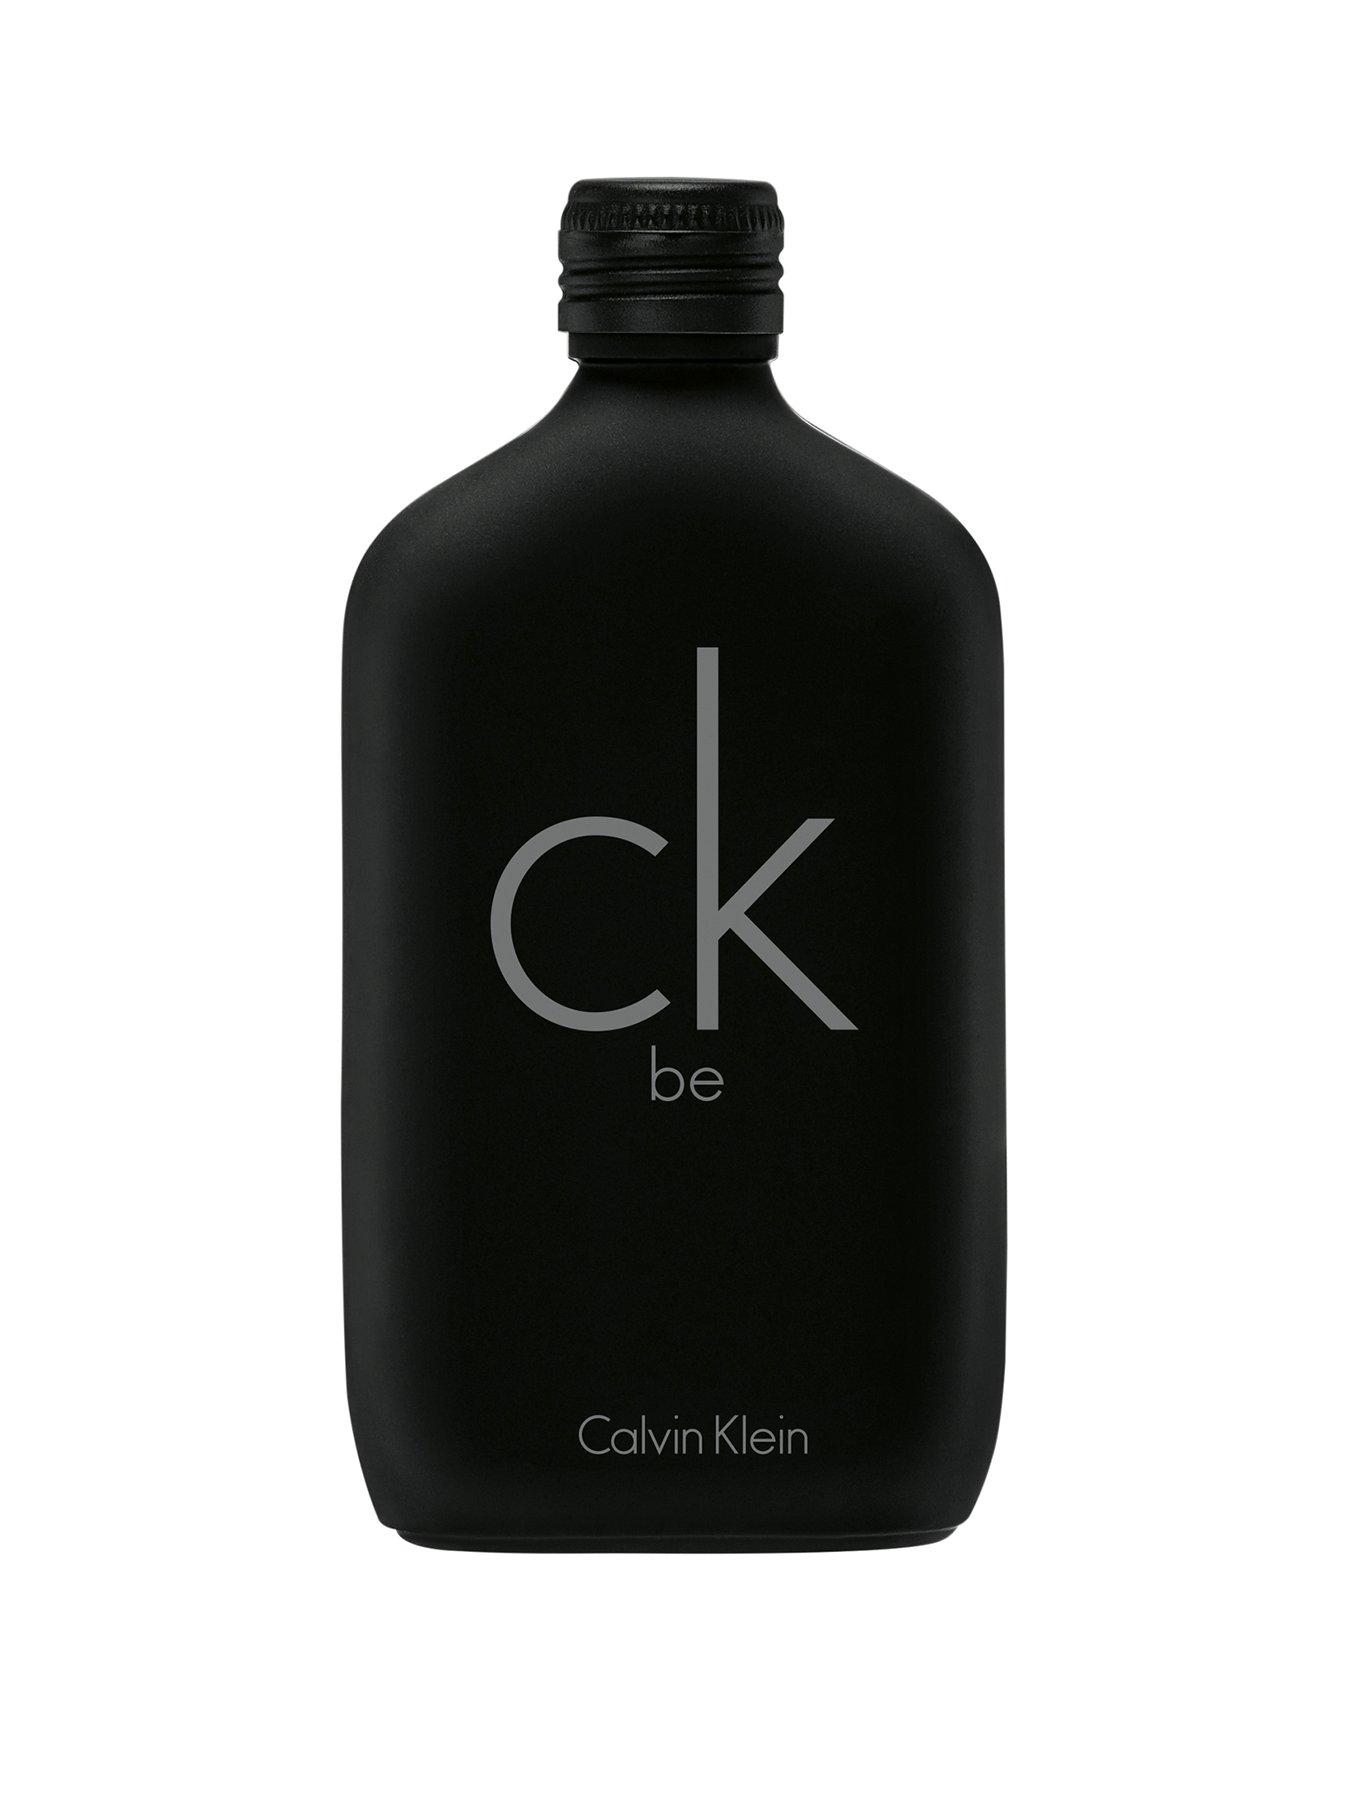 Calvin Klein CK Be Unisex Eau de Toilette - 50ml | Very.co.uk